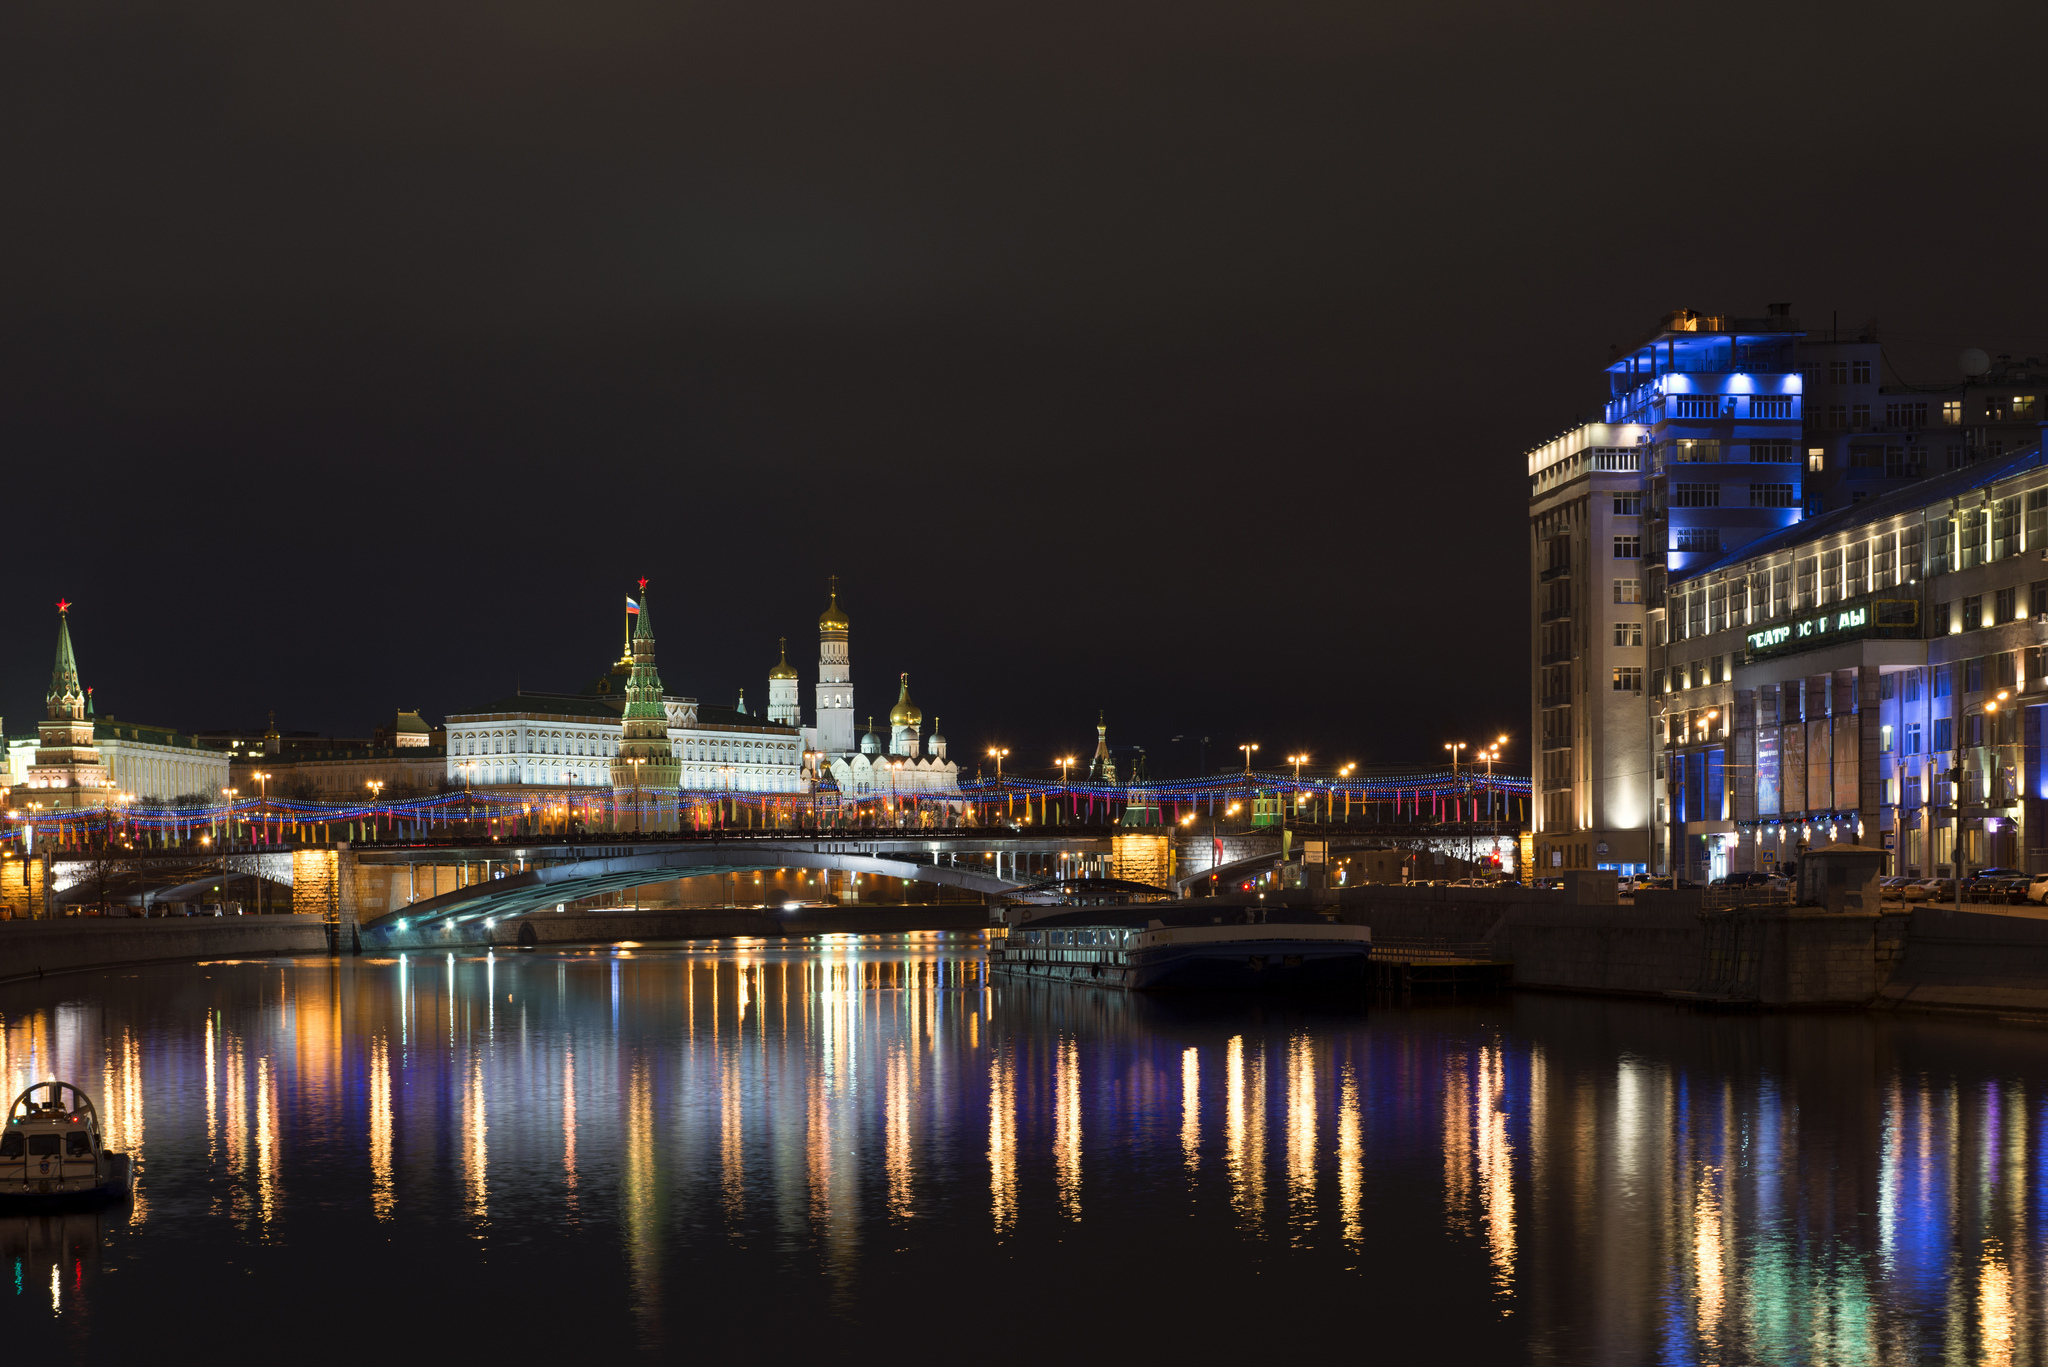 Насколько вечером. Москоу Сити река Москва. Москва река Москва Сити ночью. Ночная Москва-река вид с теплохода.